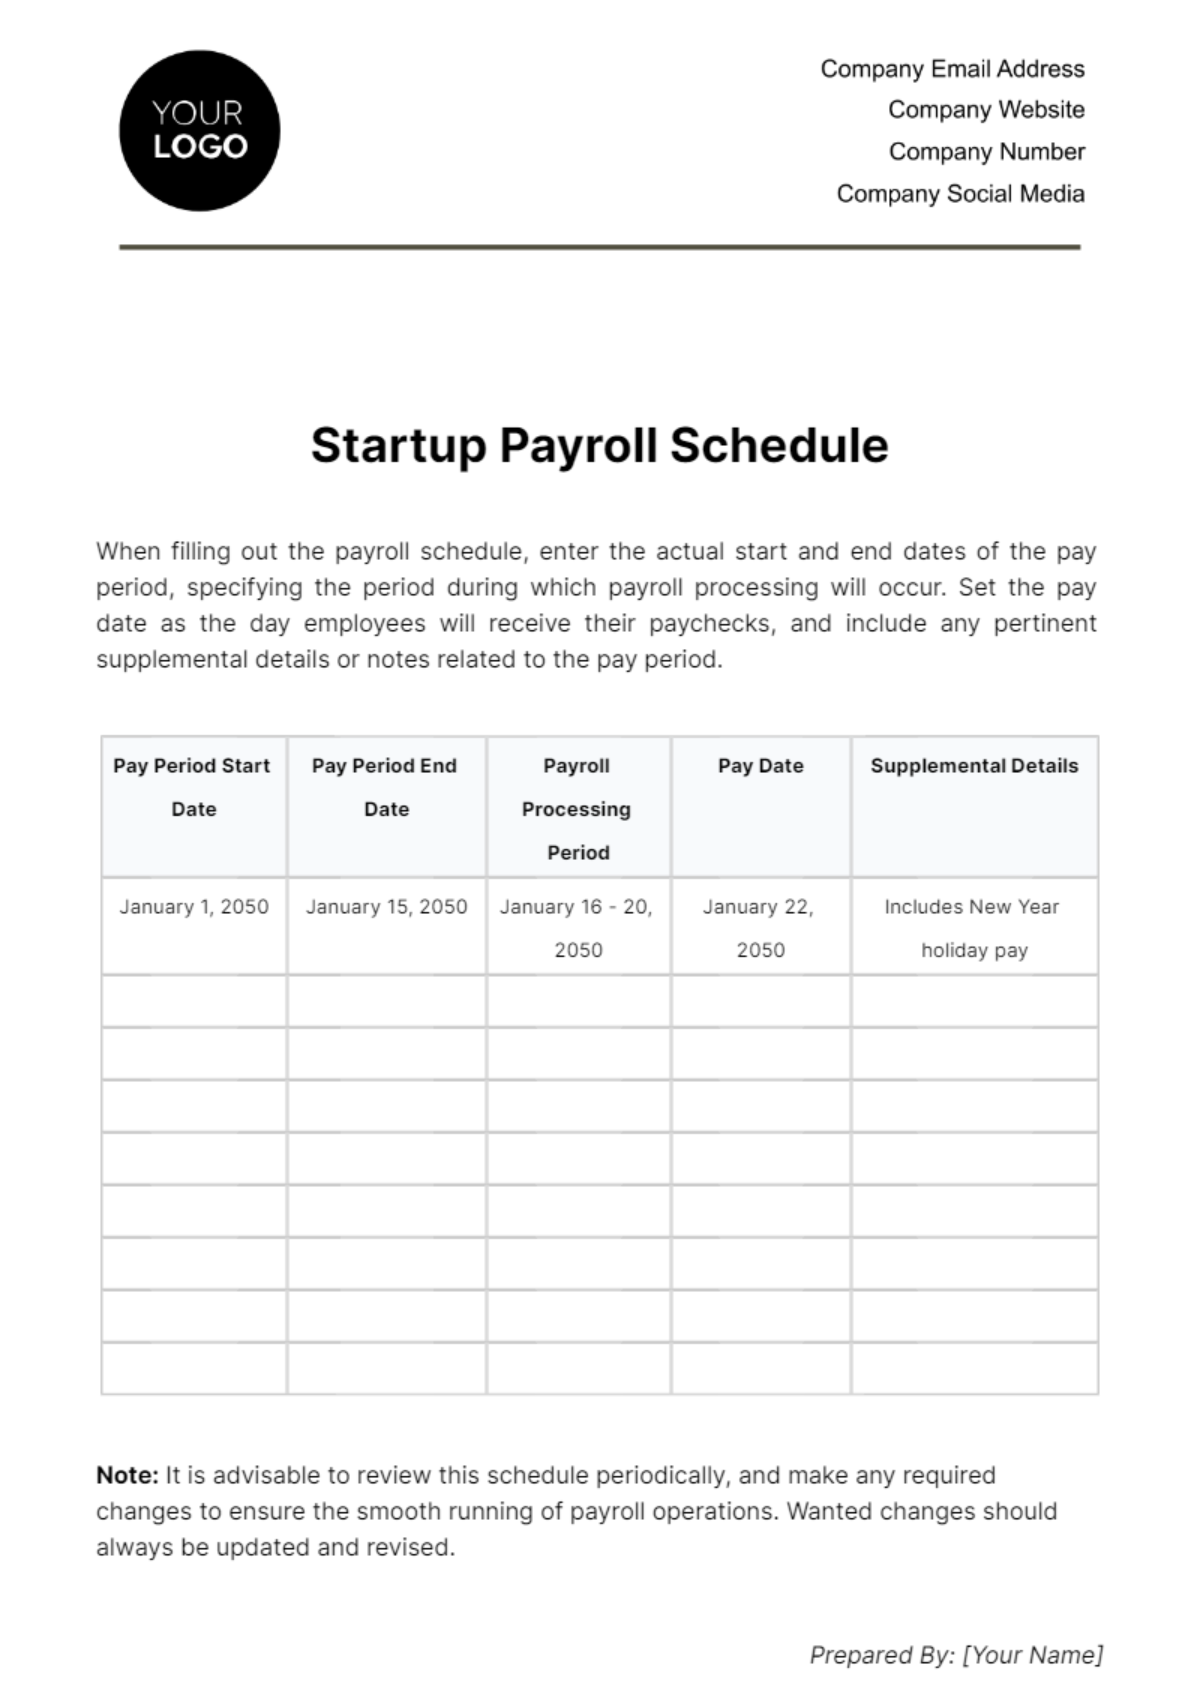 Startup Payroll Schedule Template